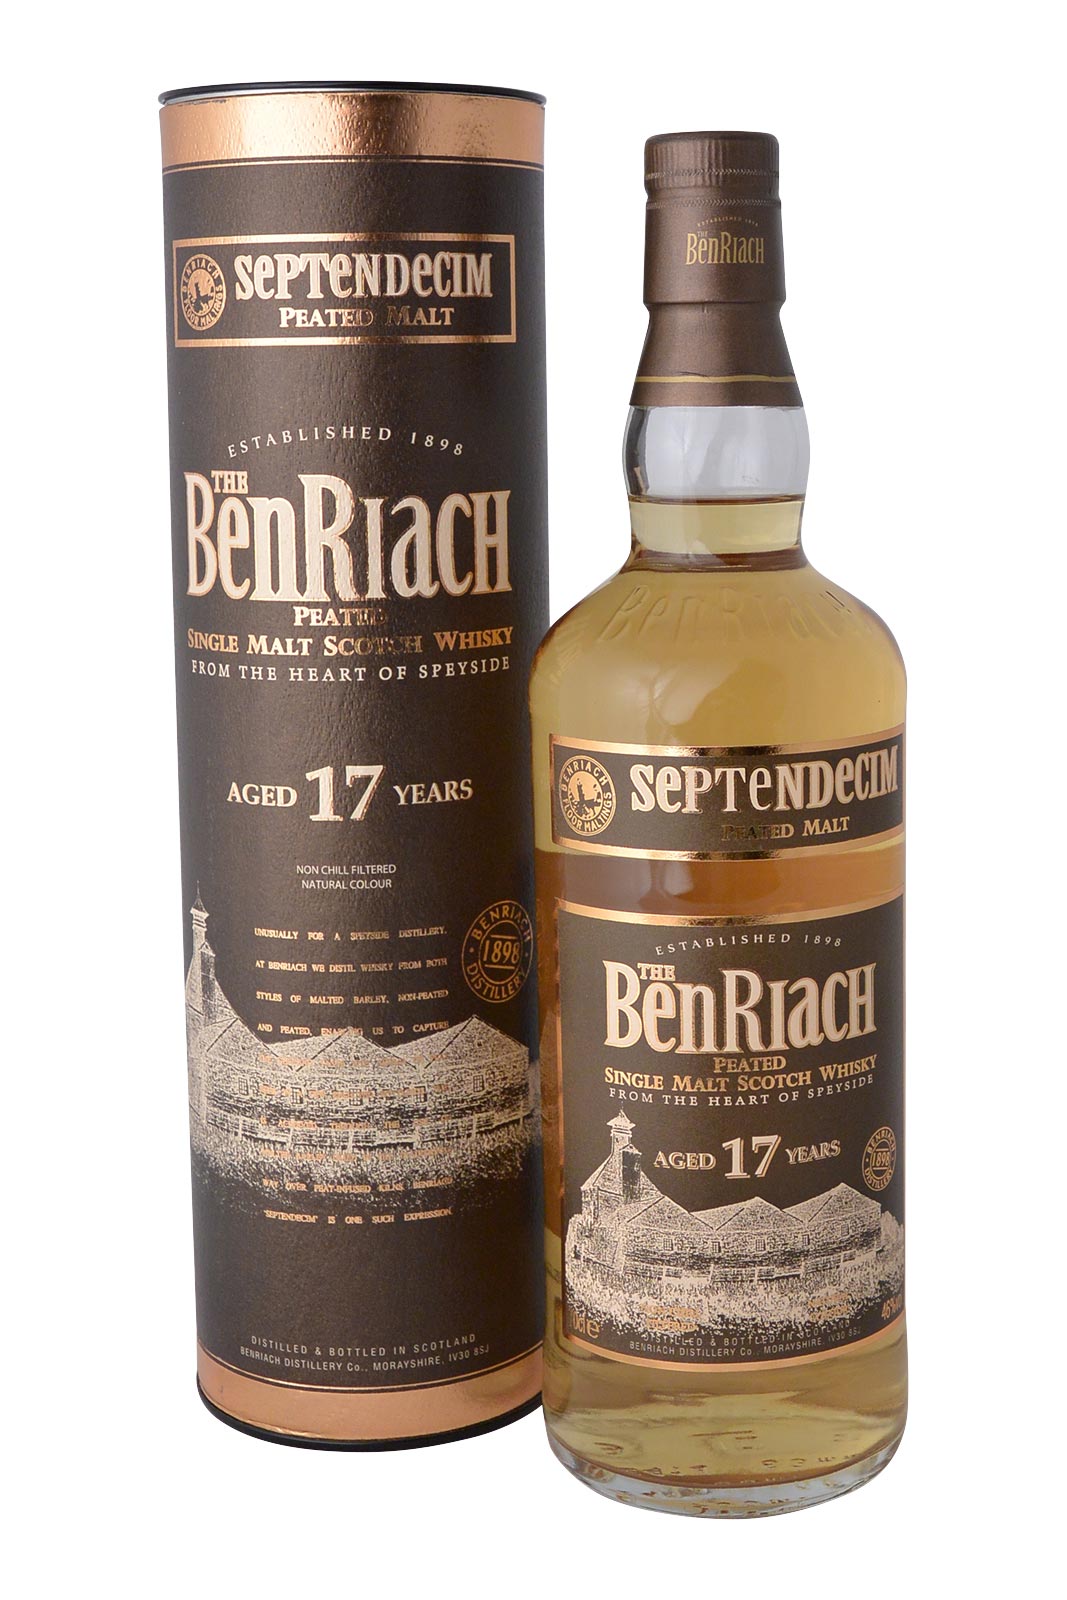 Benriach Septendecim 17 Year Old